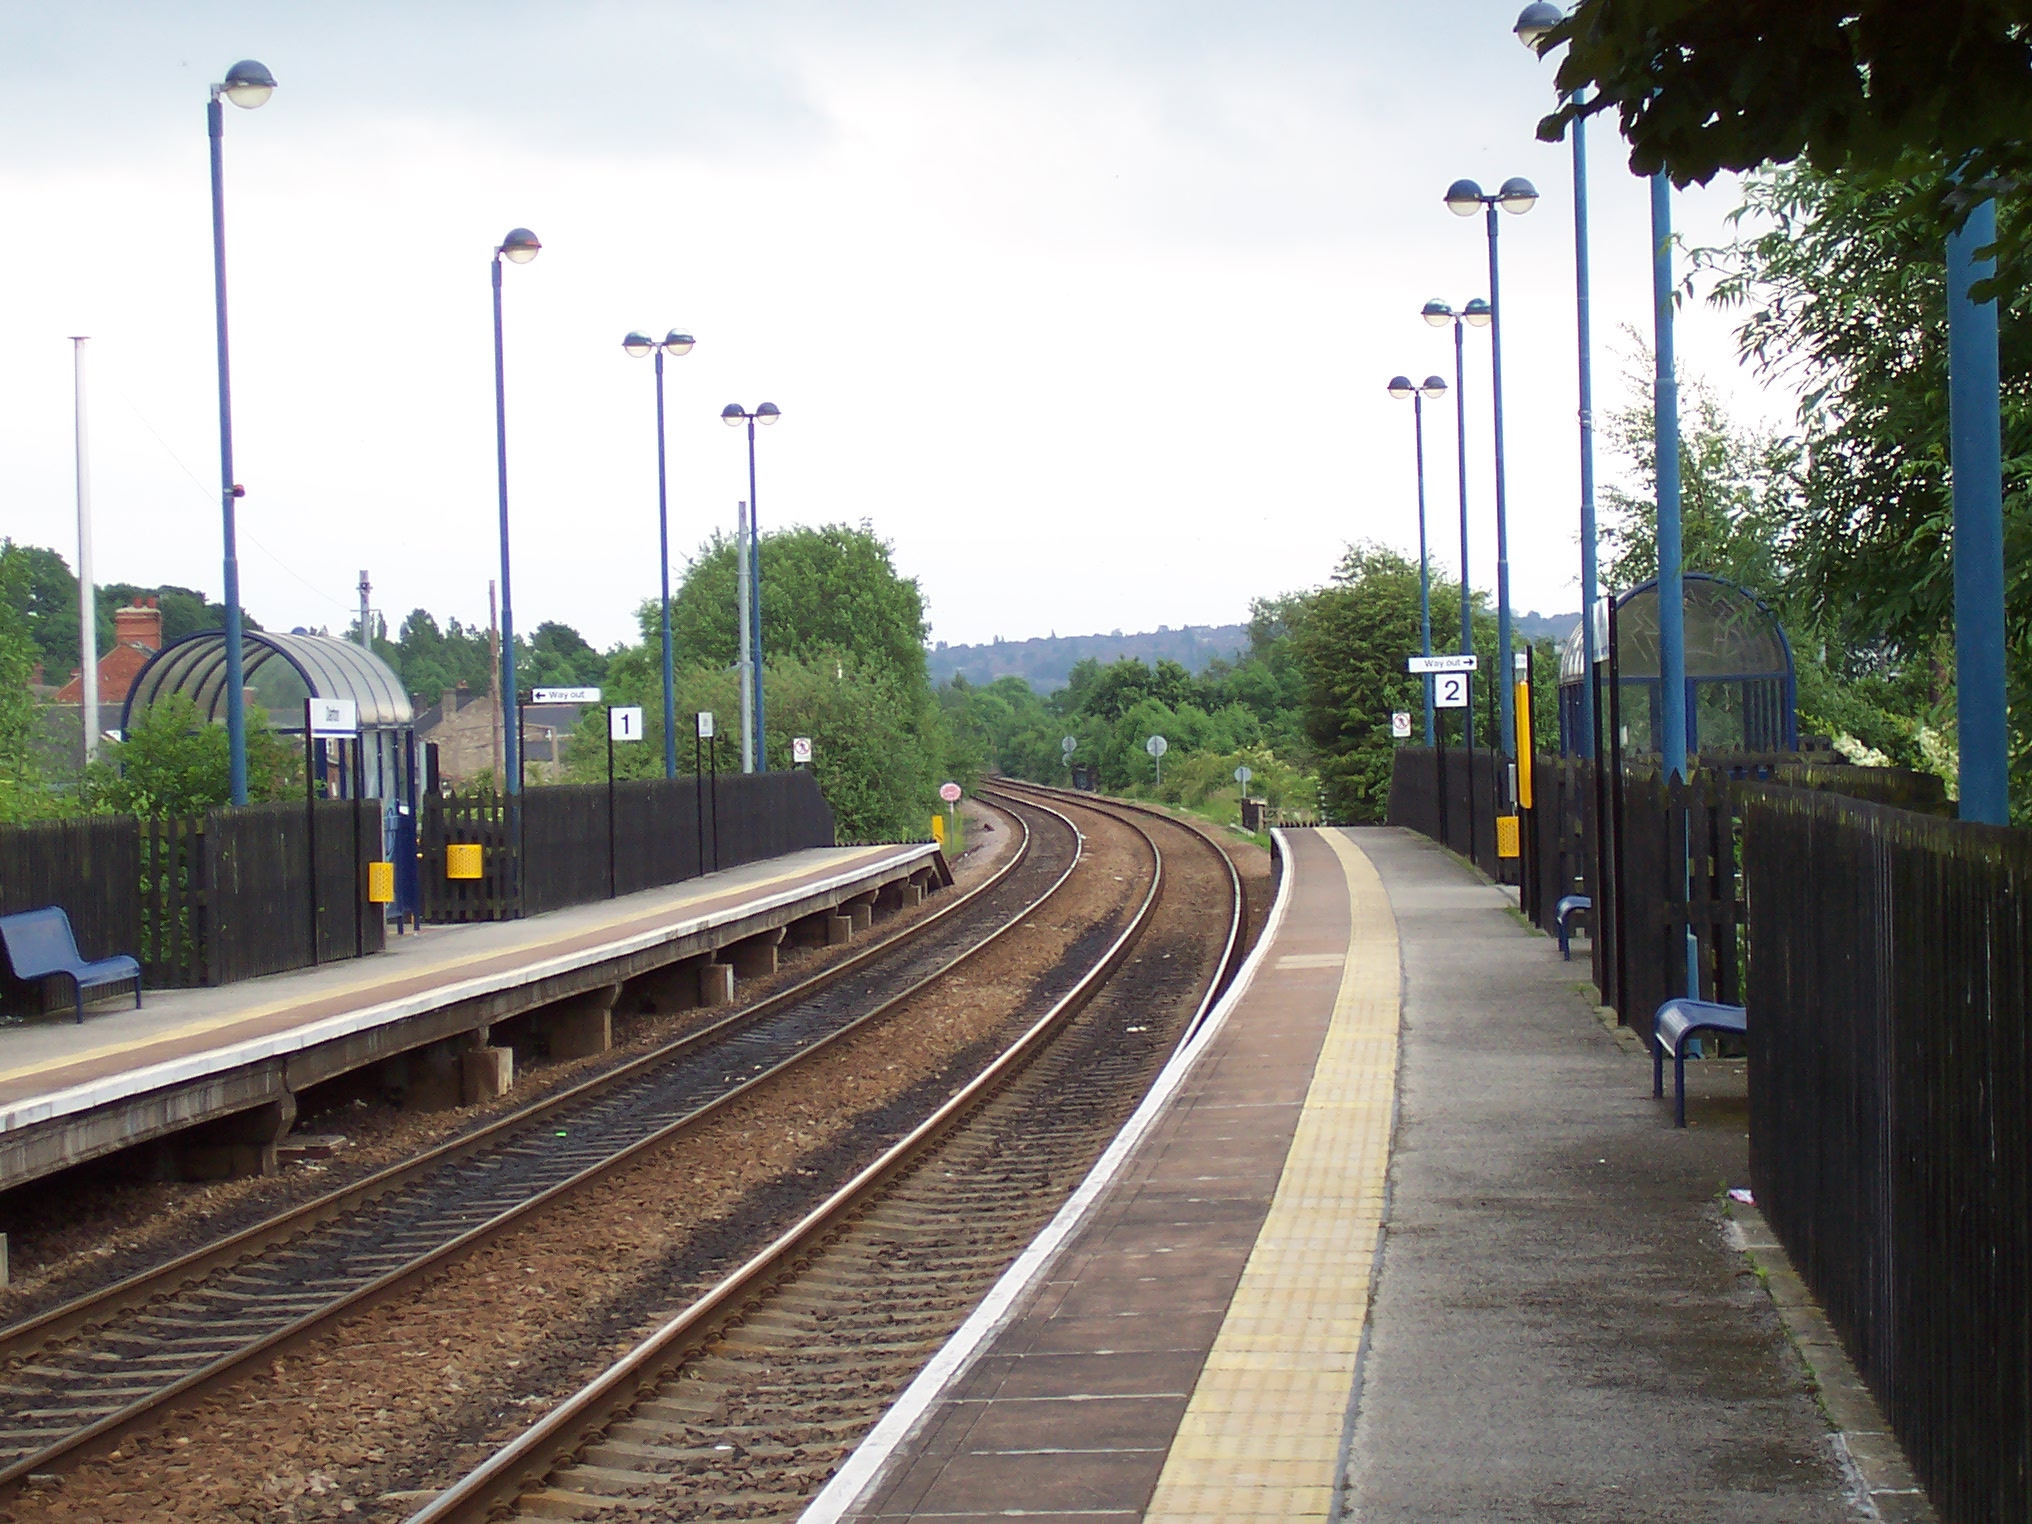 Darton railway station